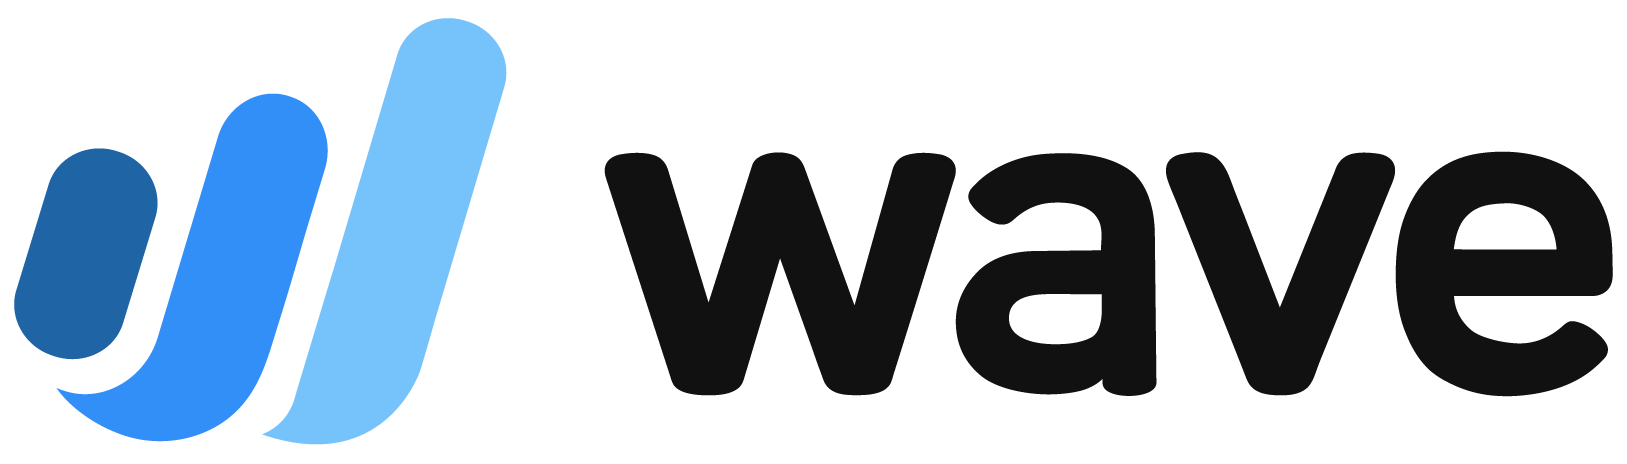 Wave_logo_logo